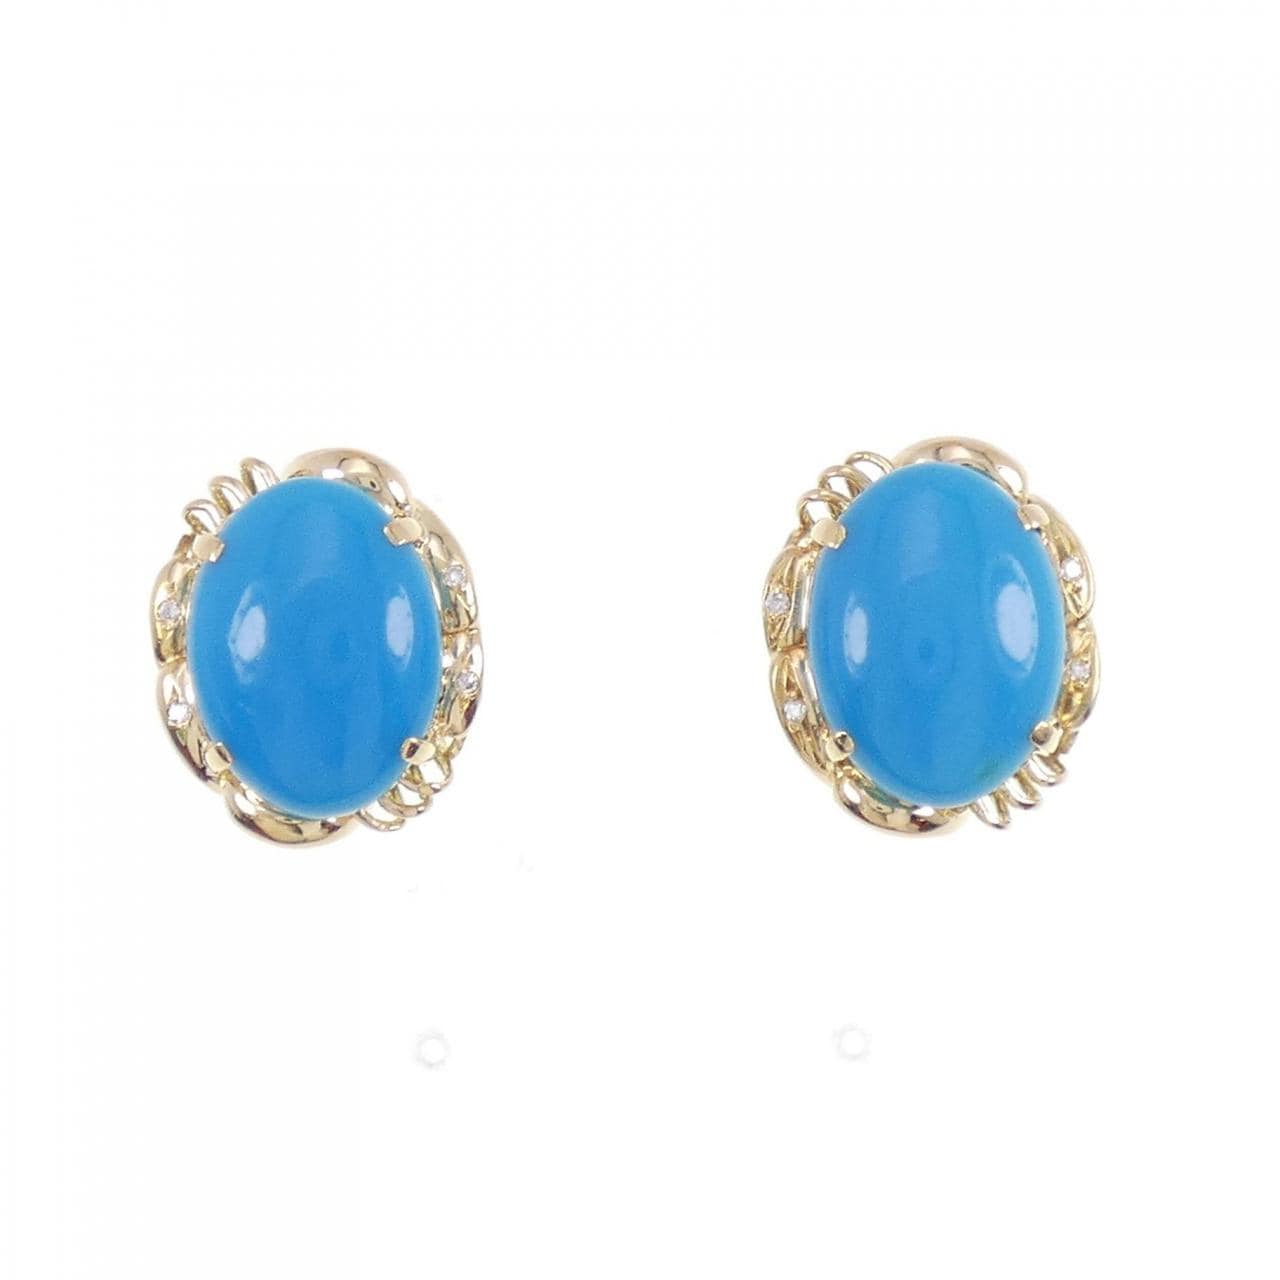 K18YG turquoise earrings